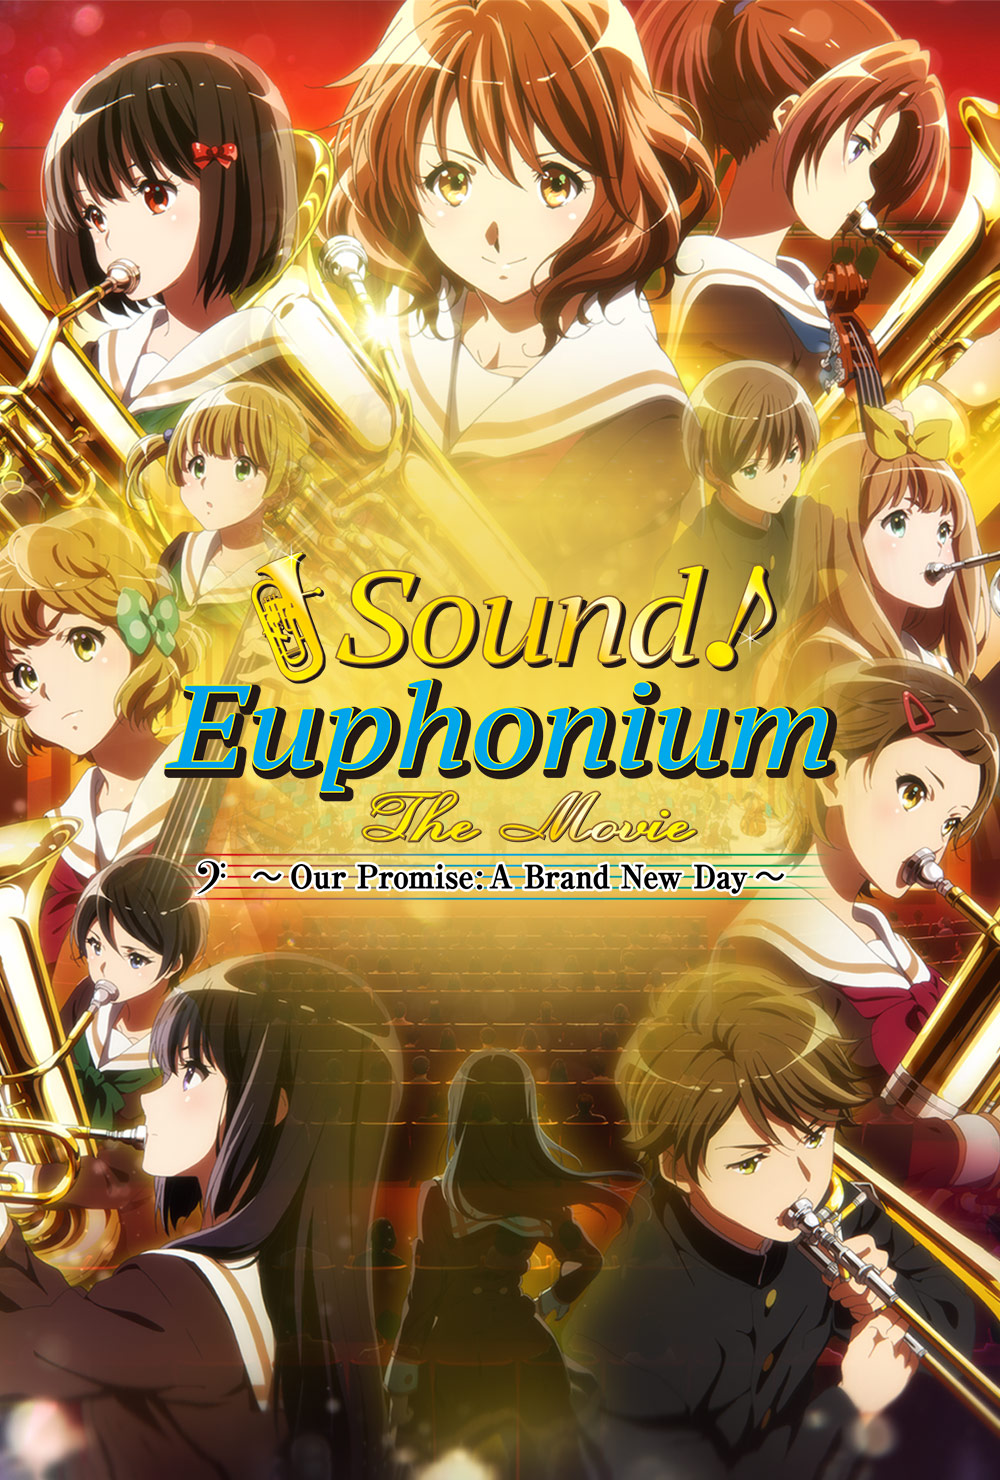 Sound! Euphonium 3 Anime Reveals Teaser Trailer - News - Anime News Network